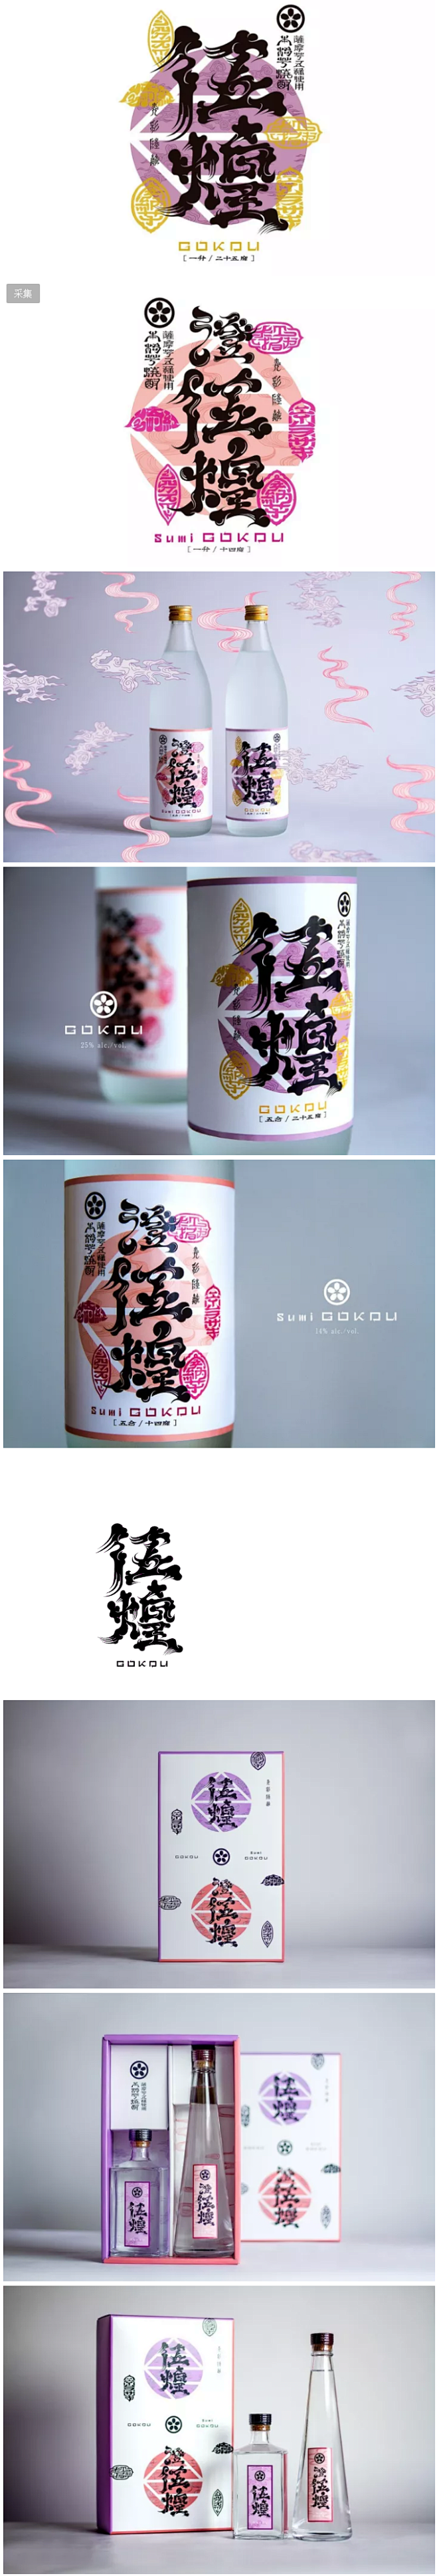 GOKOU & SumiGOKOU日式酒...